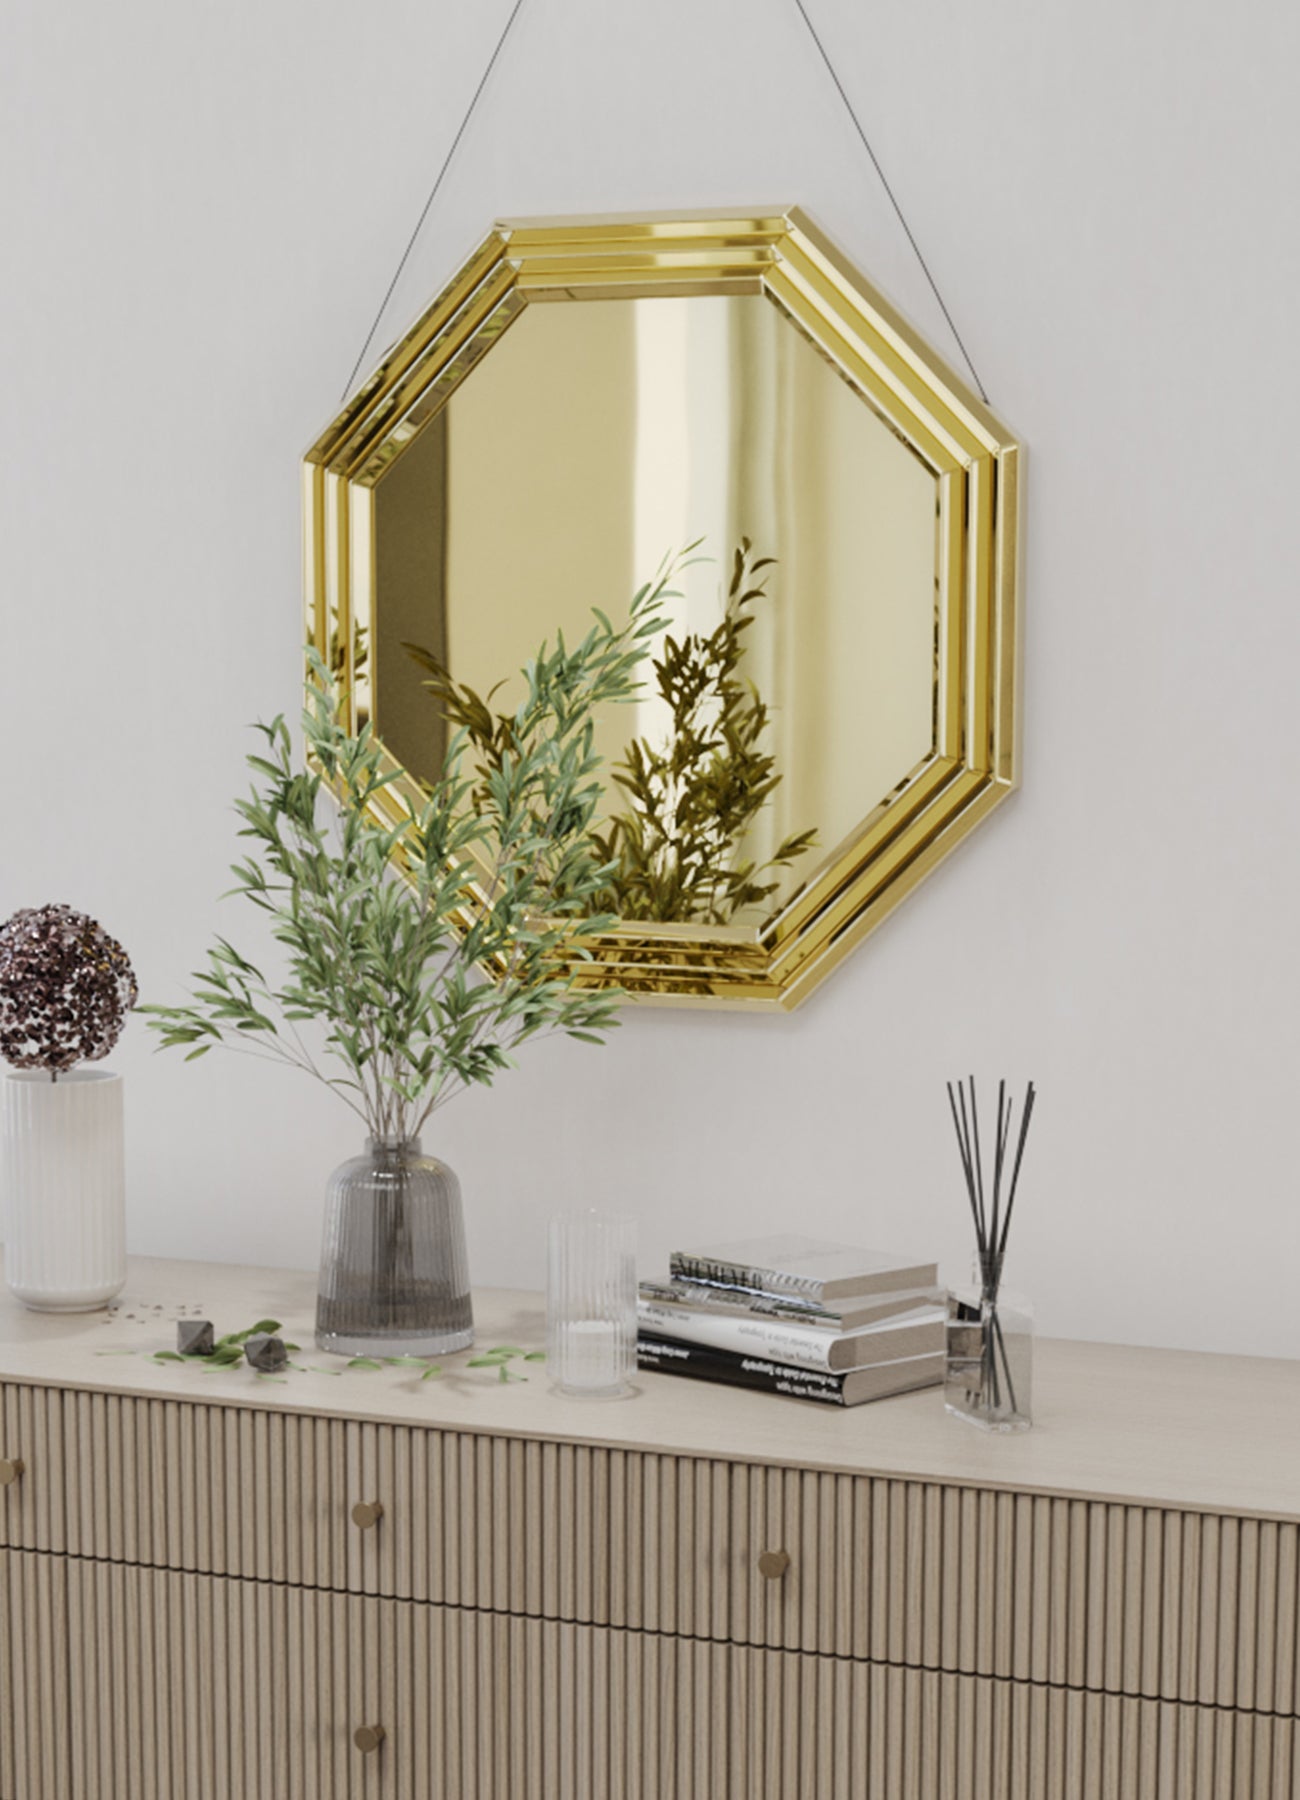 Gold 24" Octagon Geometric Mirror Wall | W101